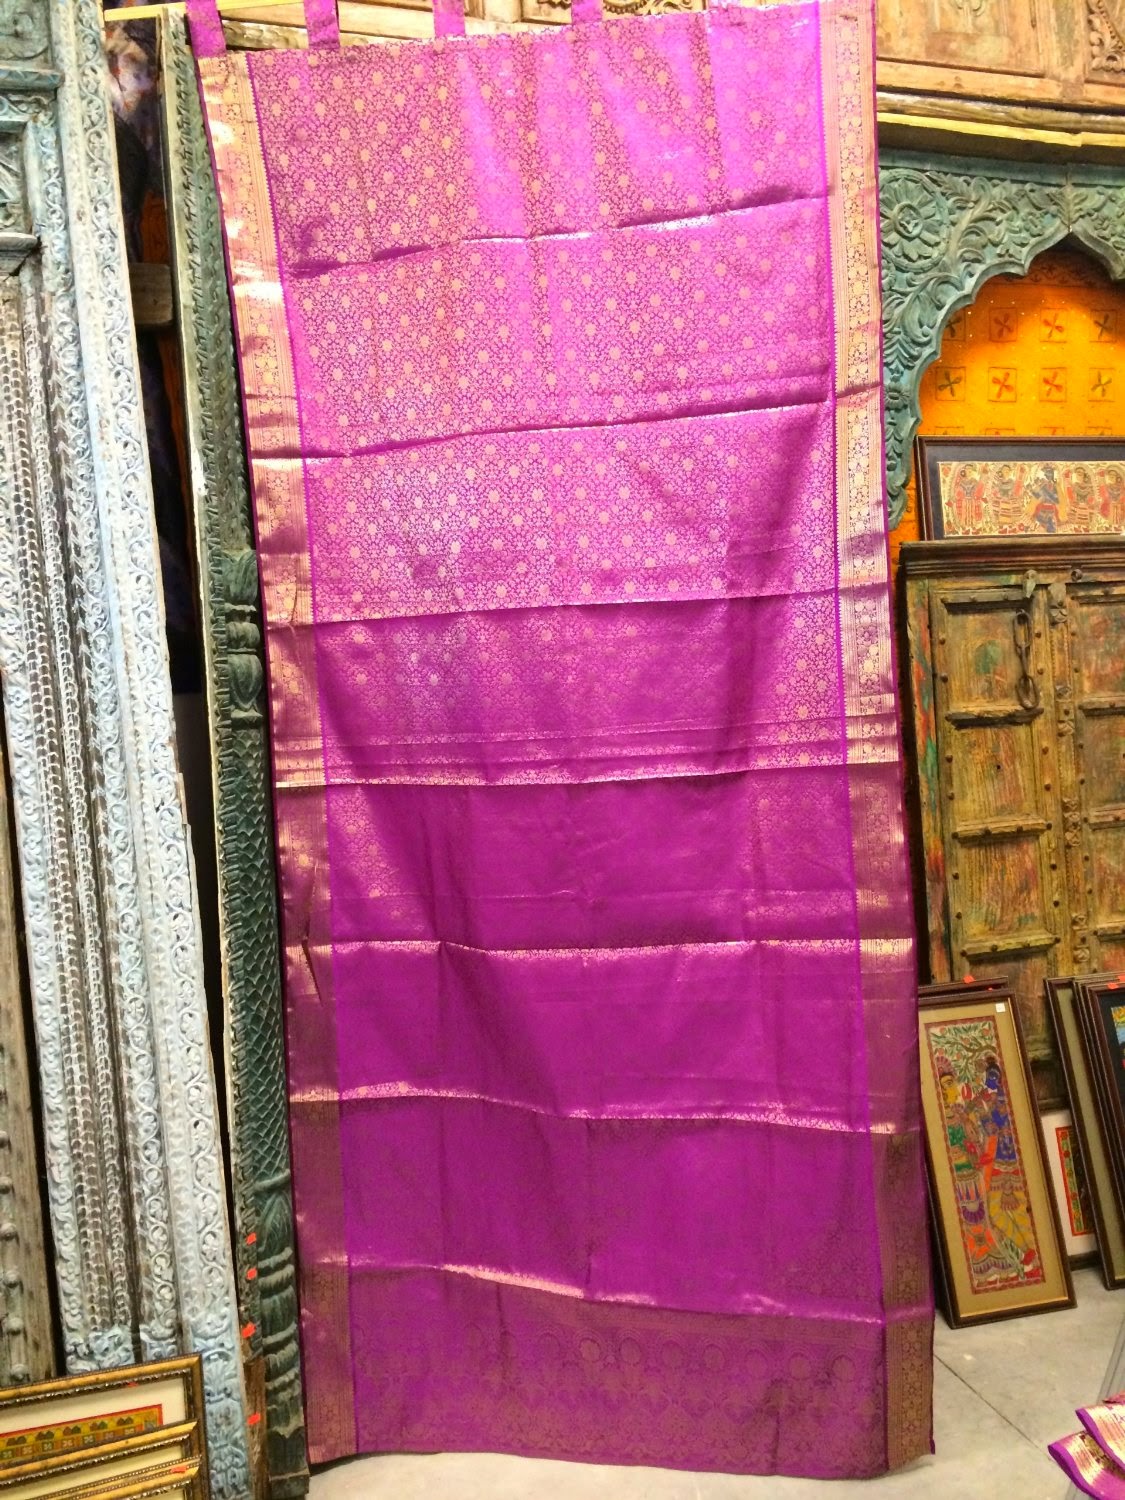 http://www.amazon.com/Curtains-Brocade-Drapes-Curtain-Dressing/dp/B00K5LDK2O/ref=sr_1_20?m=A1FLPADQPBV8TK&s=merchant-items&ie=UTF8&qid=1422957151&sr=1-20&keywords=sari+drapes